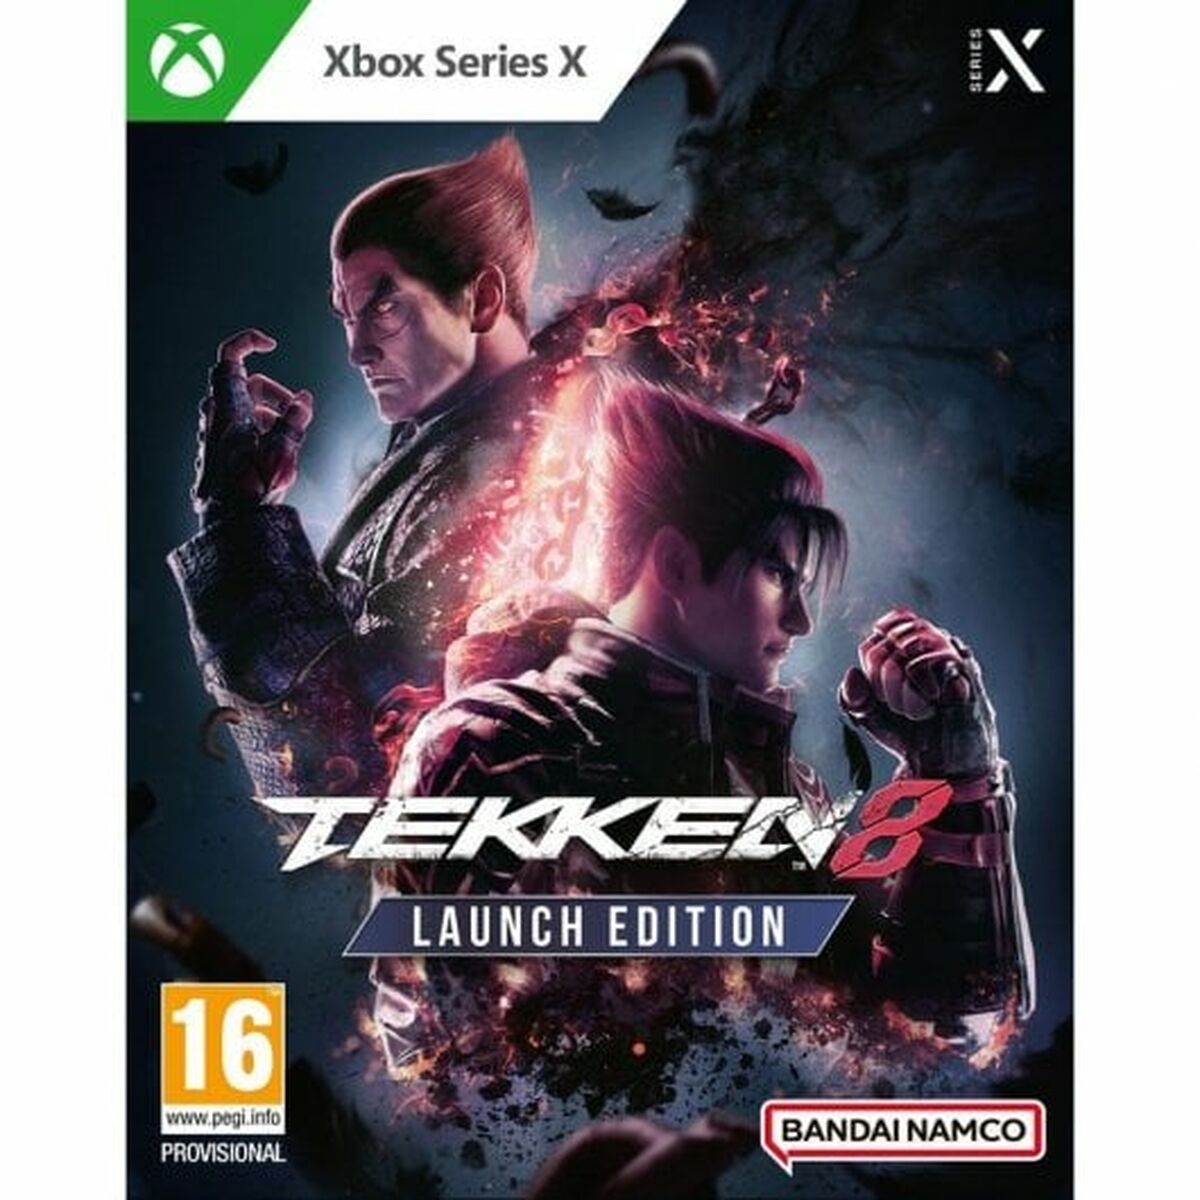 Xbox Series X videospill Bandai Namco Tekken 8 Launch Edition